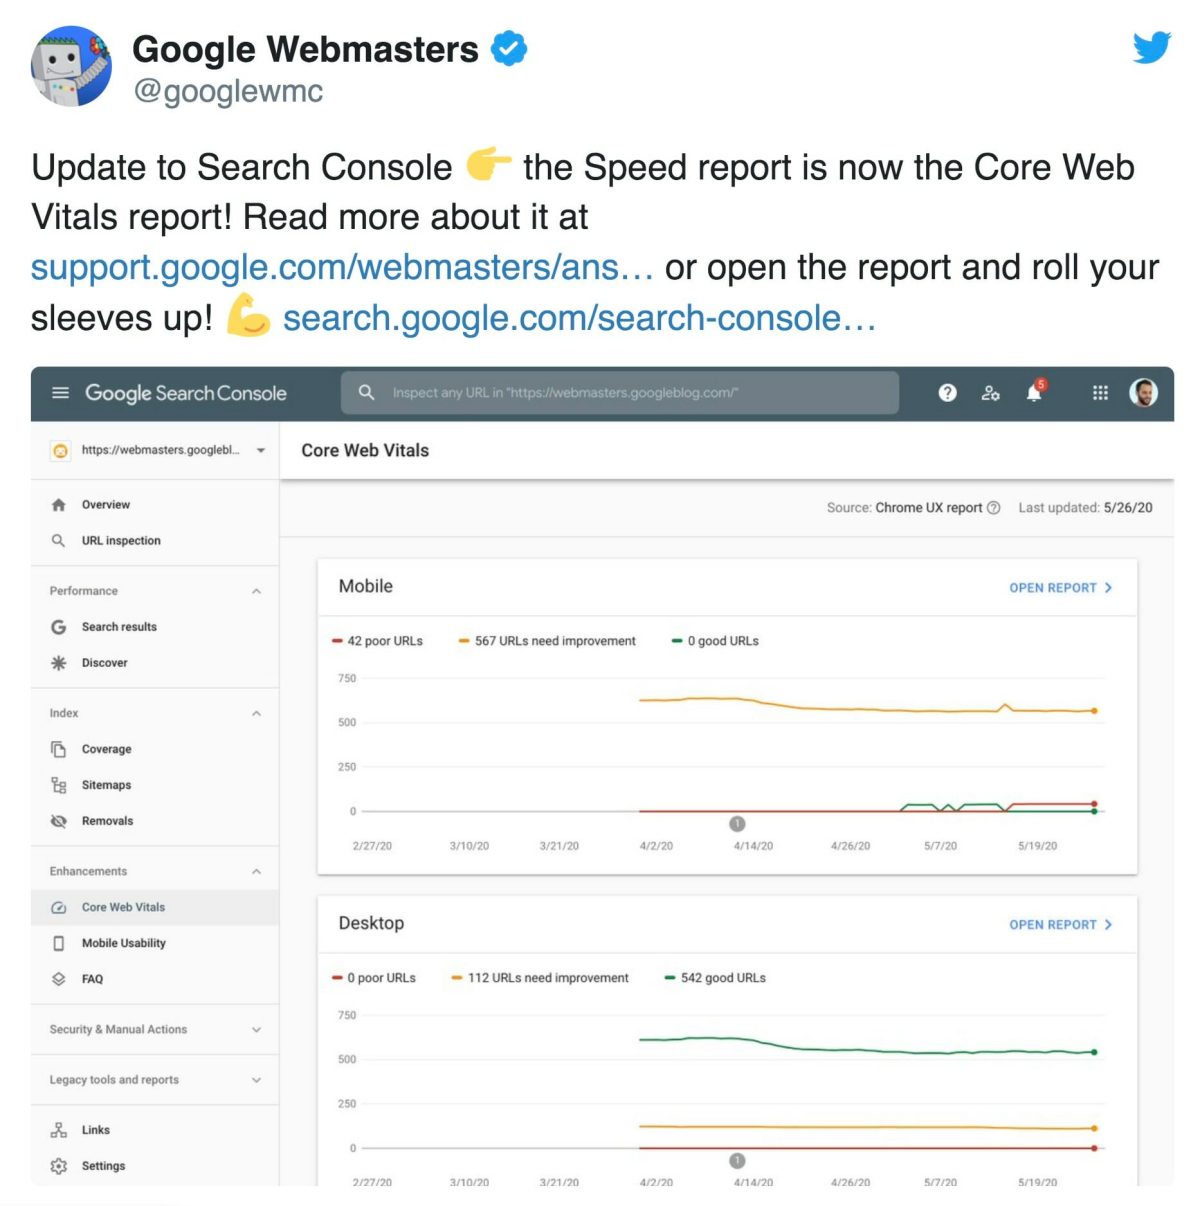 google web master tweet regarding search consolle speed report